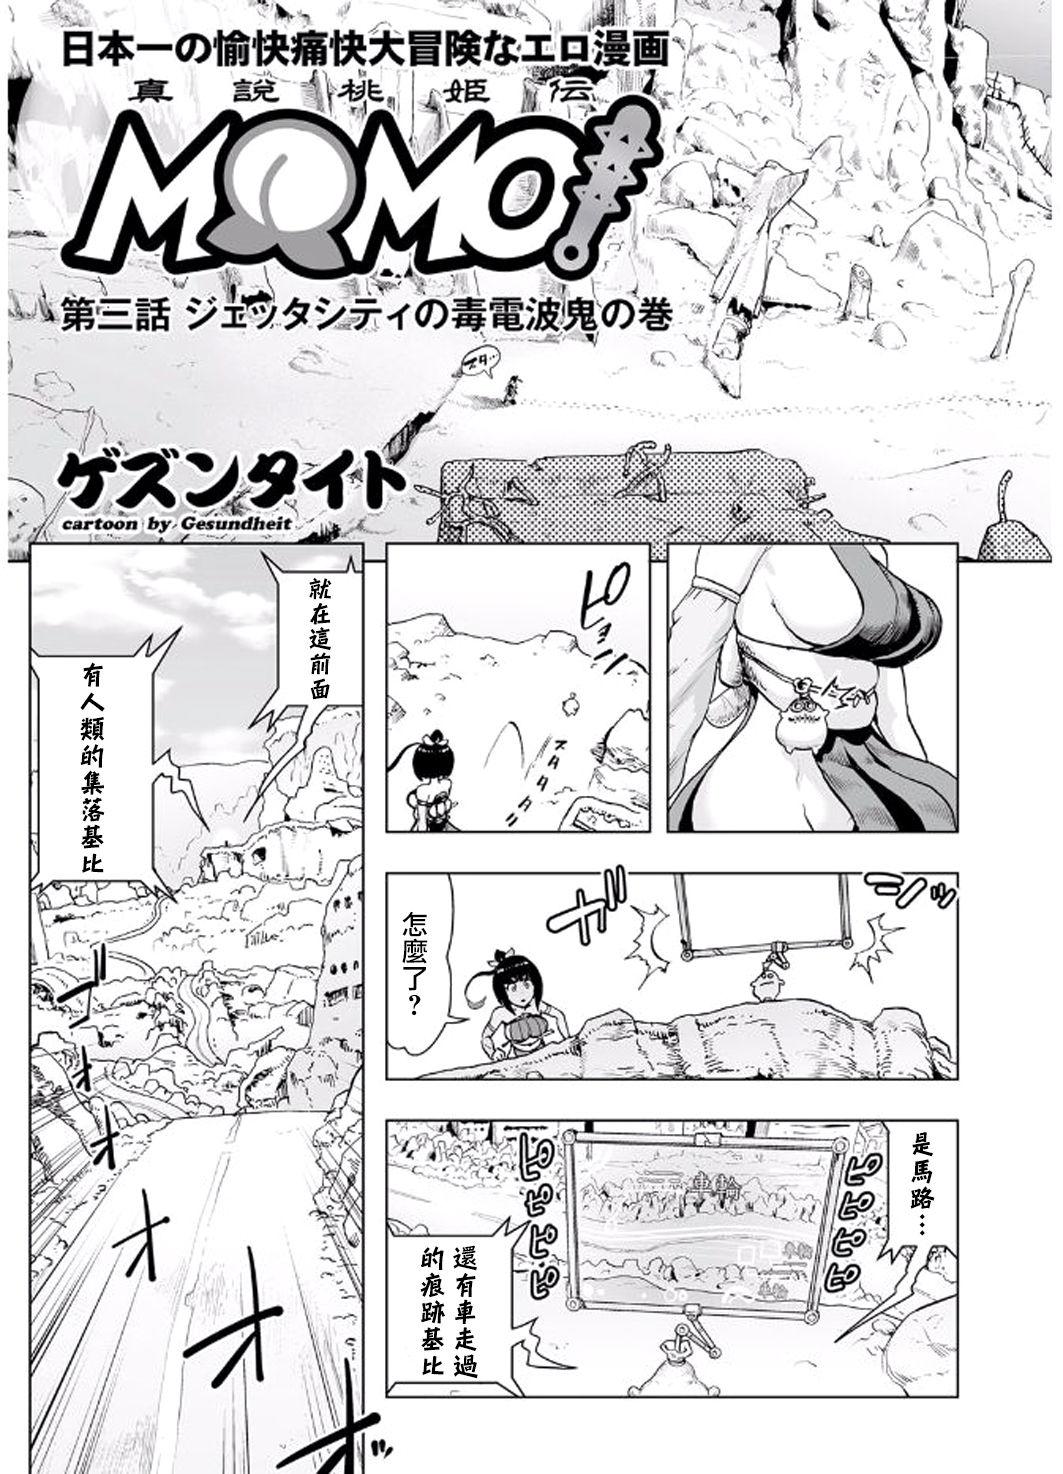 Realitykings MOMO! Daisanwa Jetta City no Dokudenpa Oni no Maki Blondes - Page 4